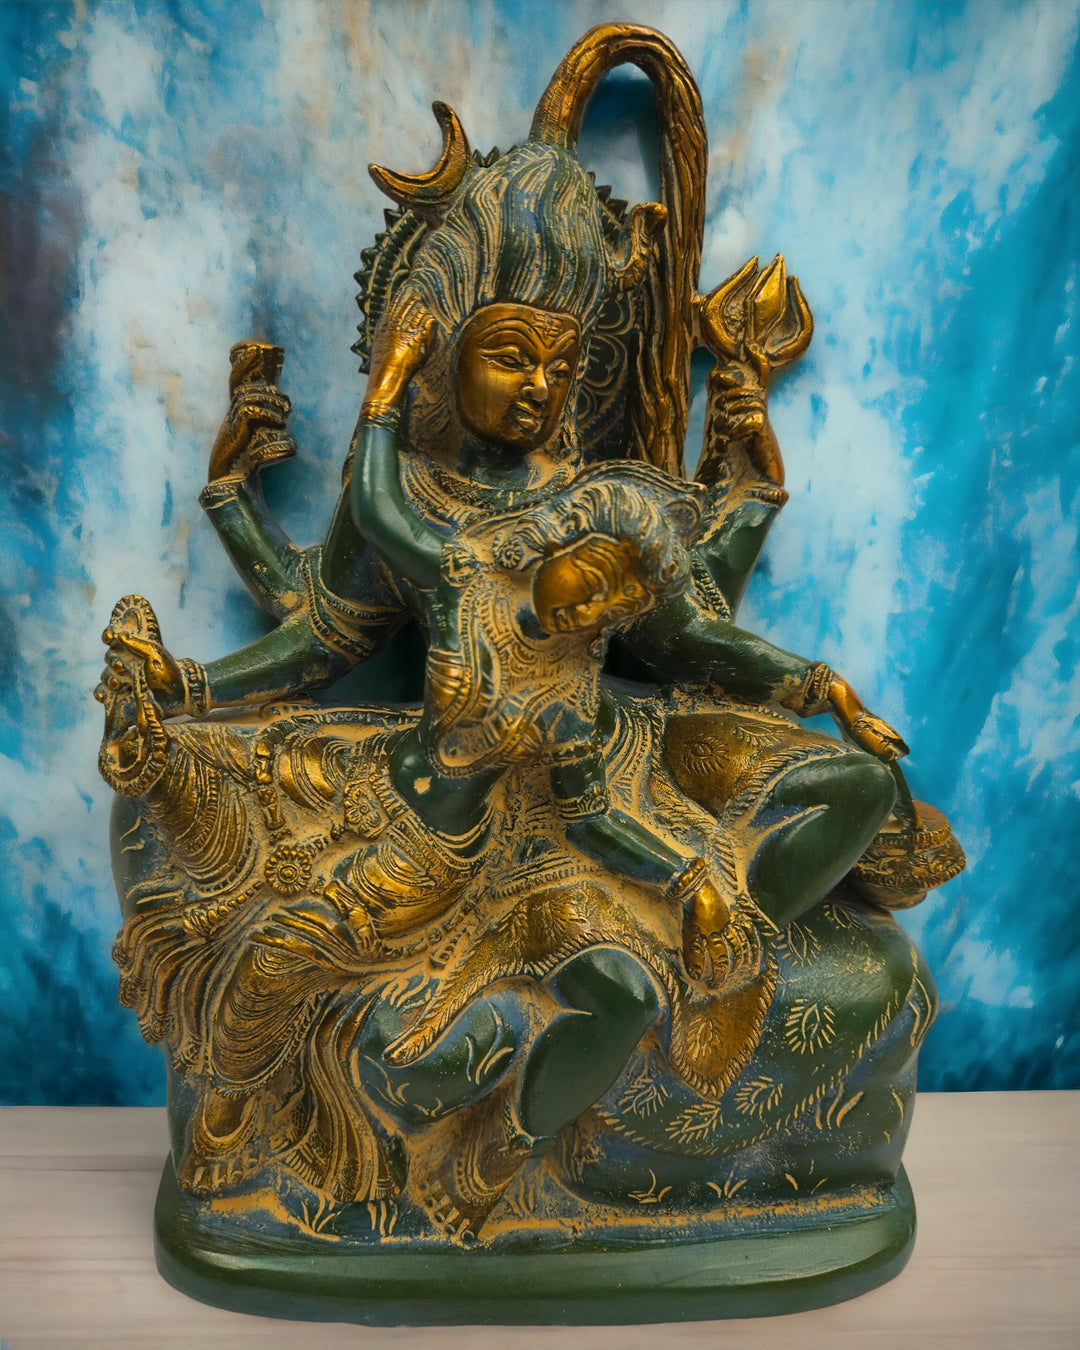 Brass Turquoise Shiv Parvati Idol| (11 X 8 X 4 inch) |Weight-5 kg